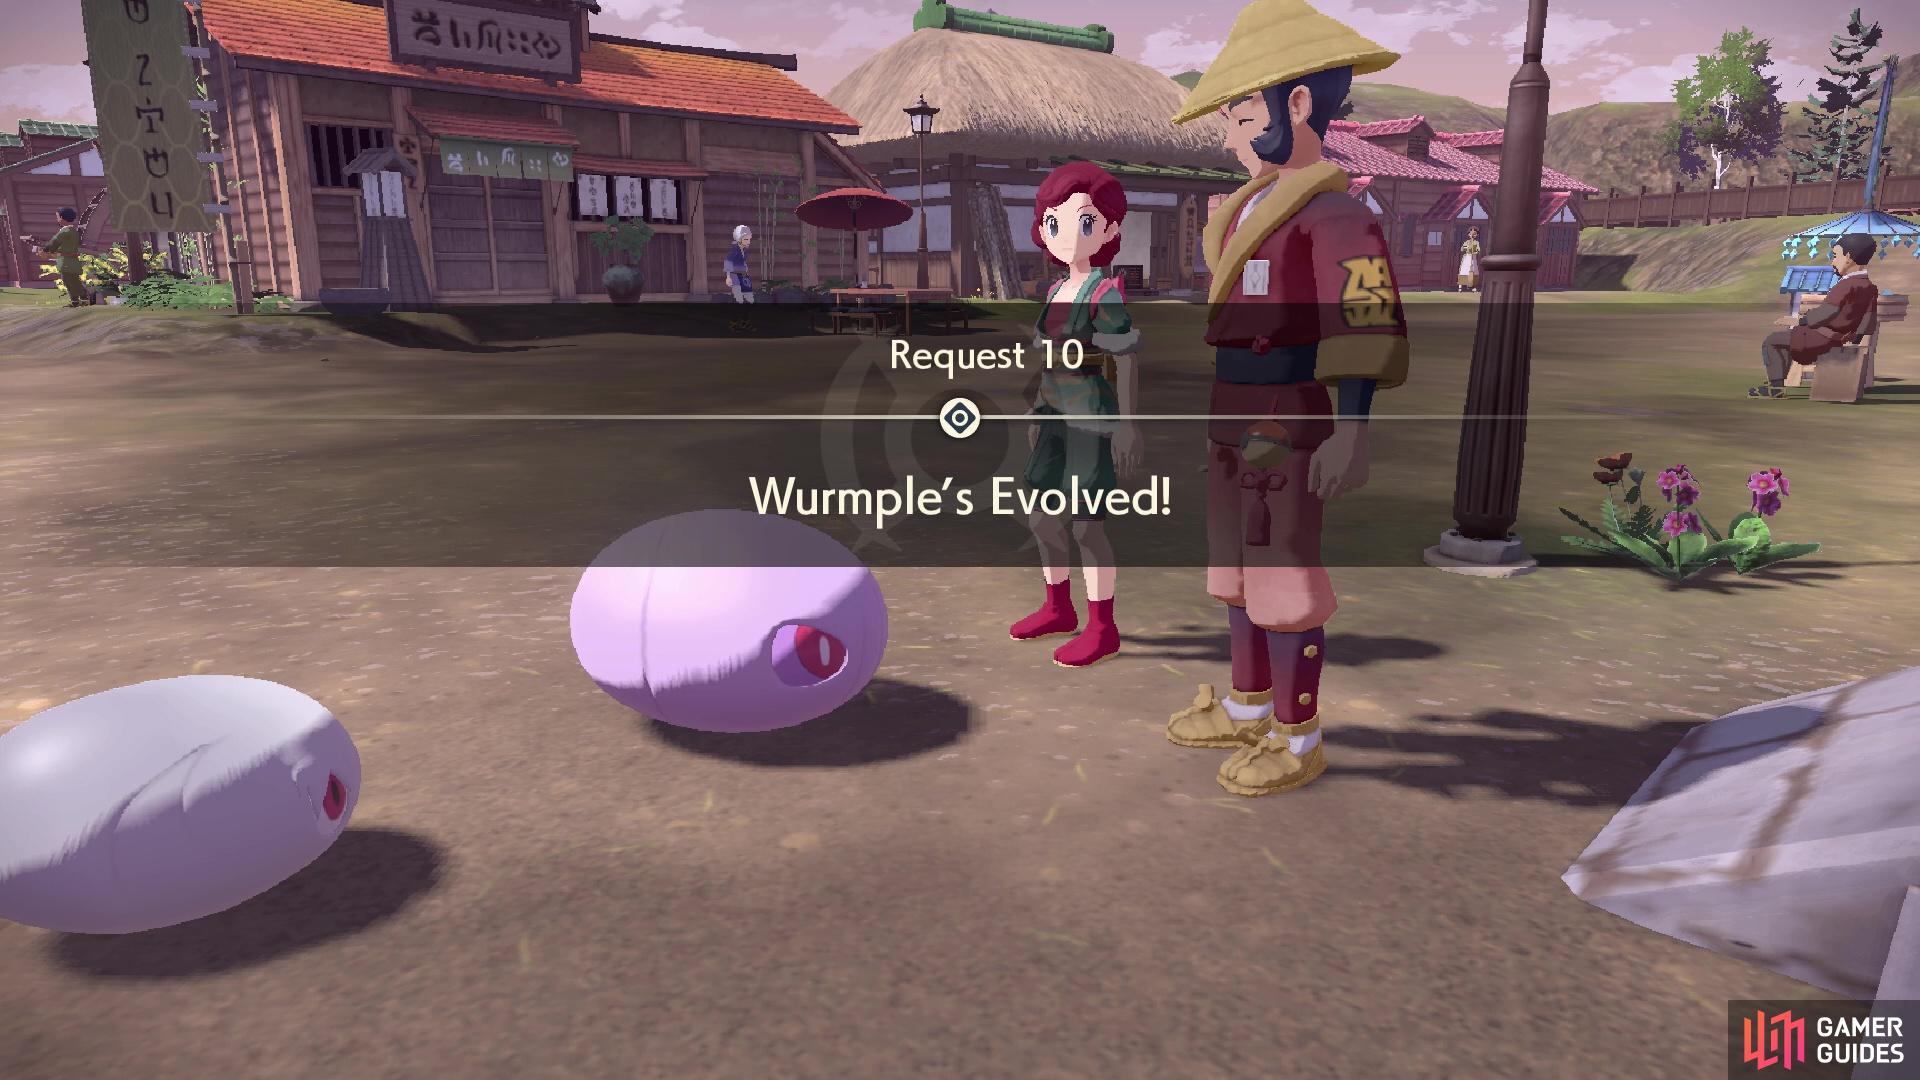 Request 10: Wurmple’s Evolved!